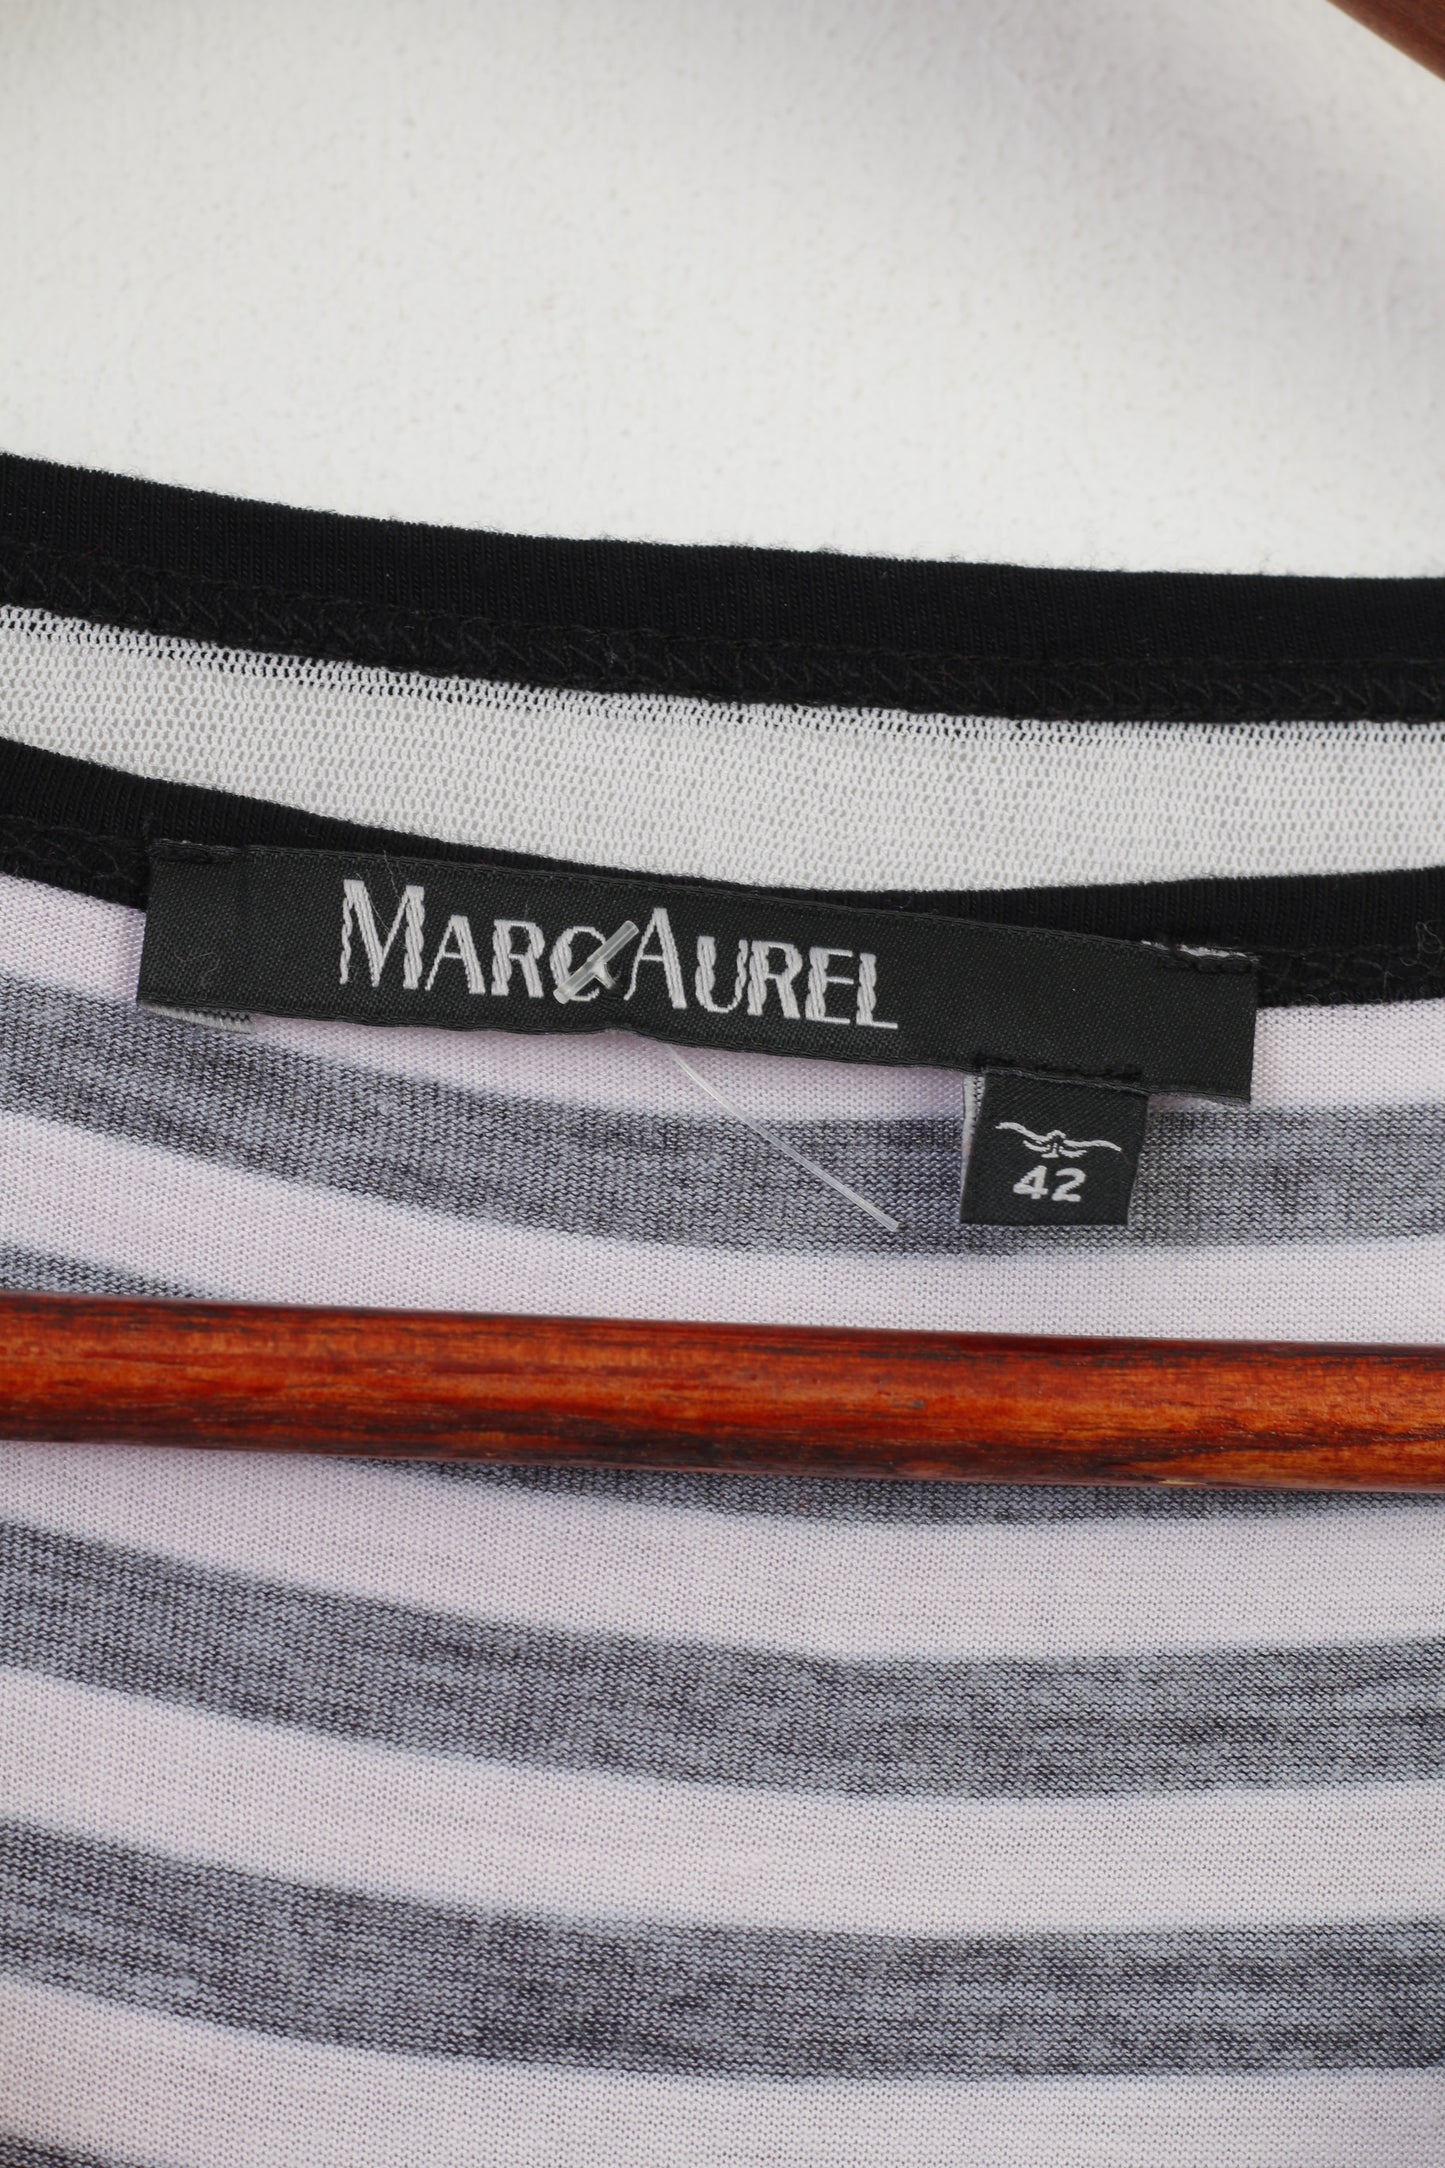 Marc Aurel Women 42 M Shirt Blouse Multi Print Striped White Black Long Sleeve Tunic Stretch Top